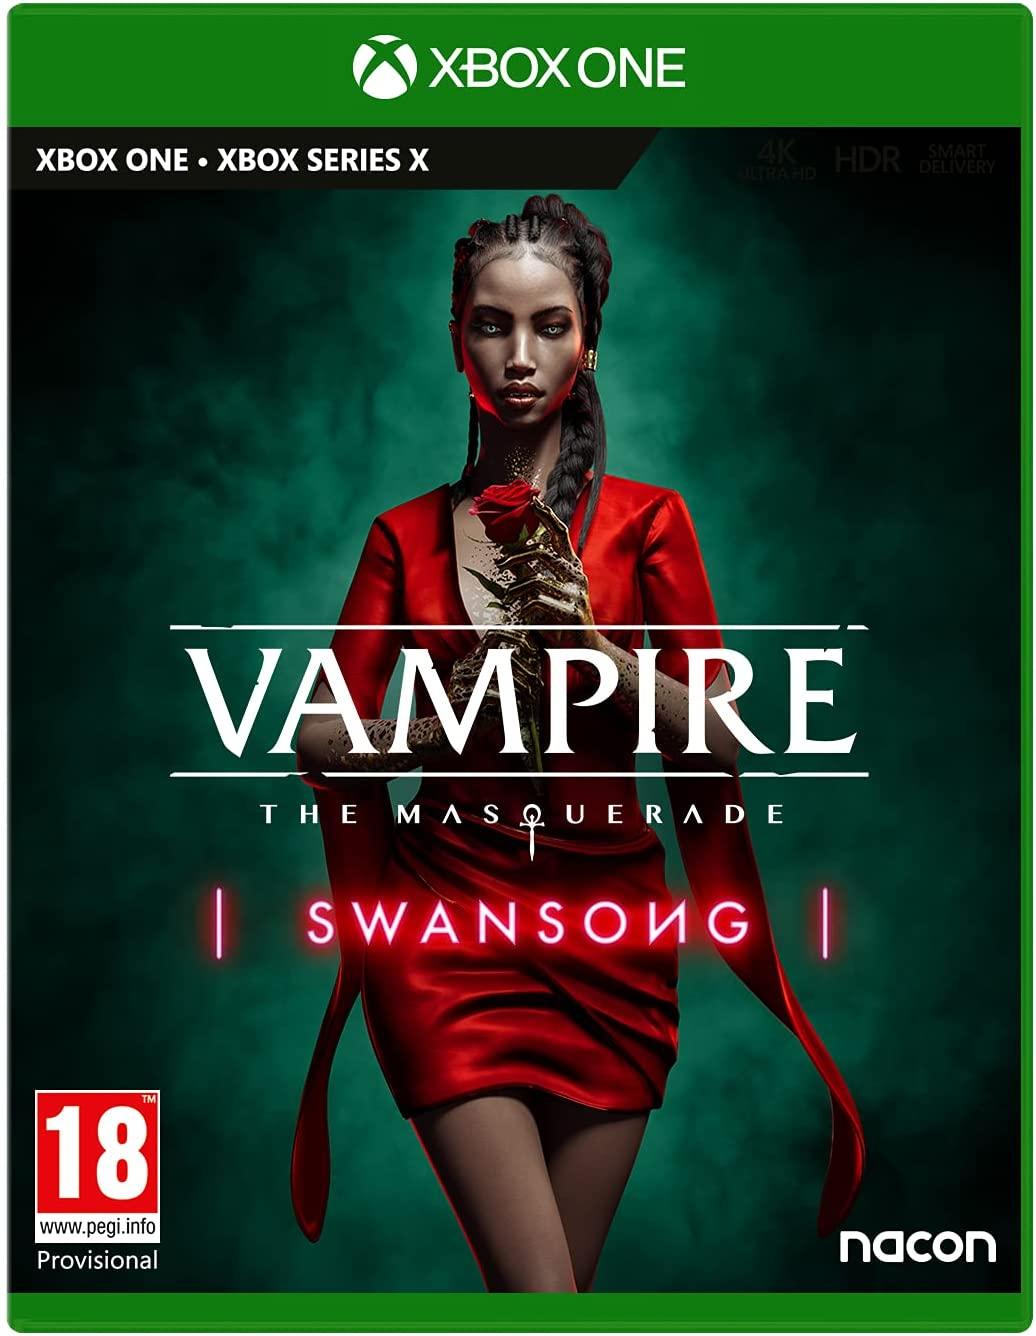 Vampire: The Masquerade - Swansong (Xbox One) (Xbox Series X) - GameStore.mt | Powered by Flutisat